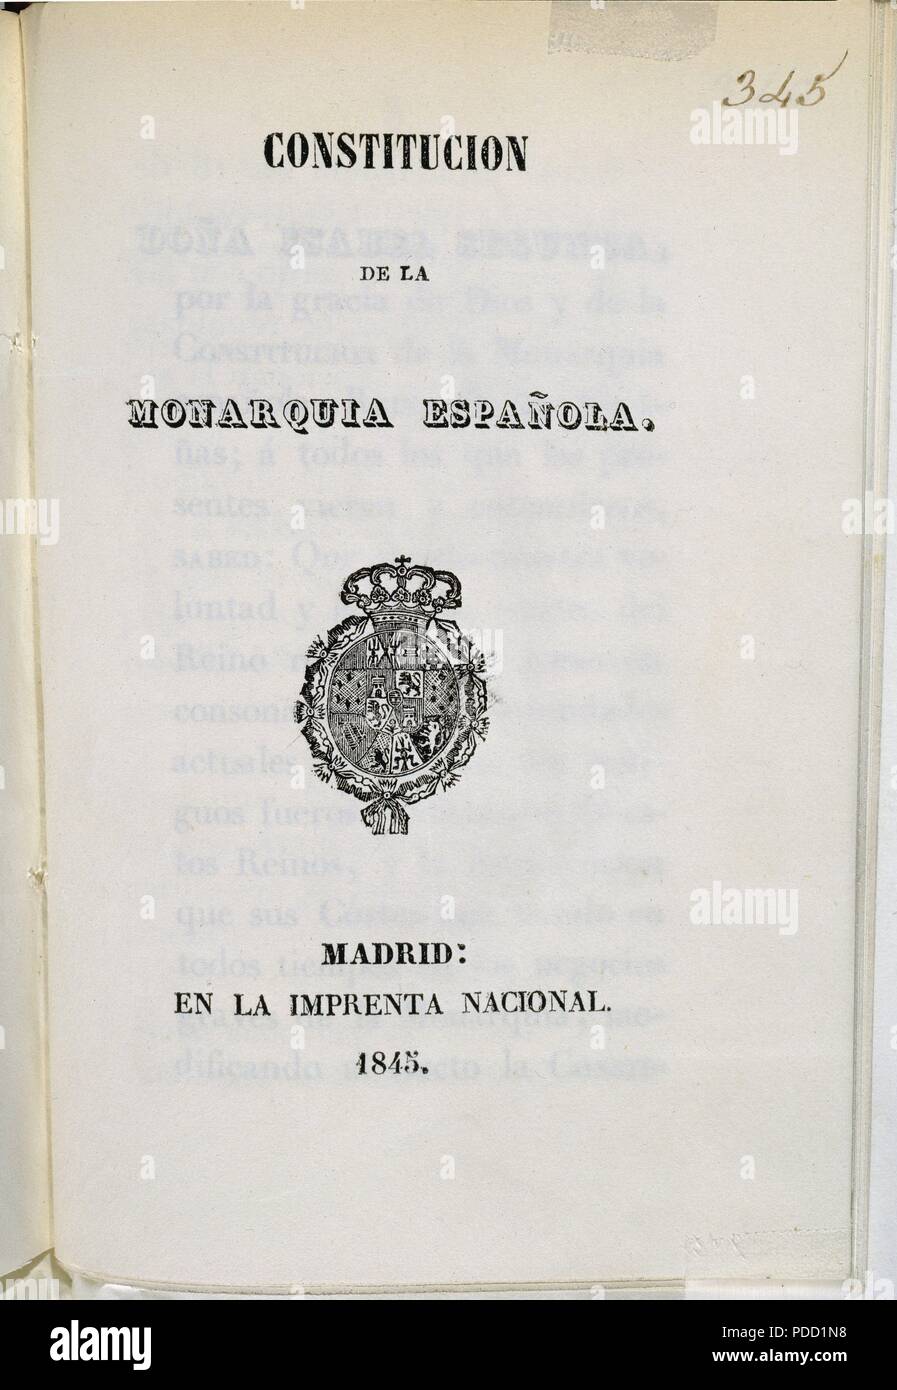 CONSTITUCION DE LA MONARQUIA ESPAÑOLA - MADRID IMPRENTA NACIONAL 1845 - PORTADA. Location: CONGRESO DE LOS DIPUTADOS-BIBLIOTECA, MADRID, SPAIN. Stock Photo